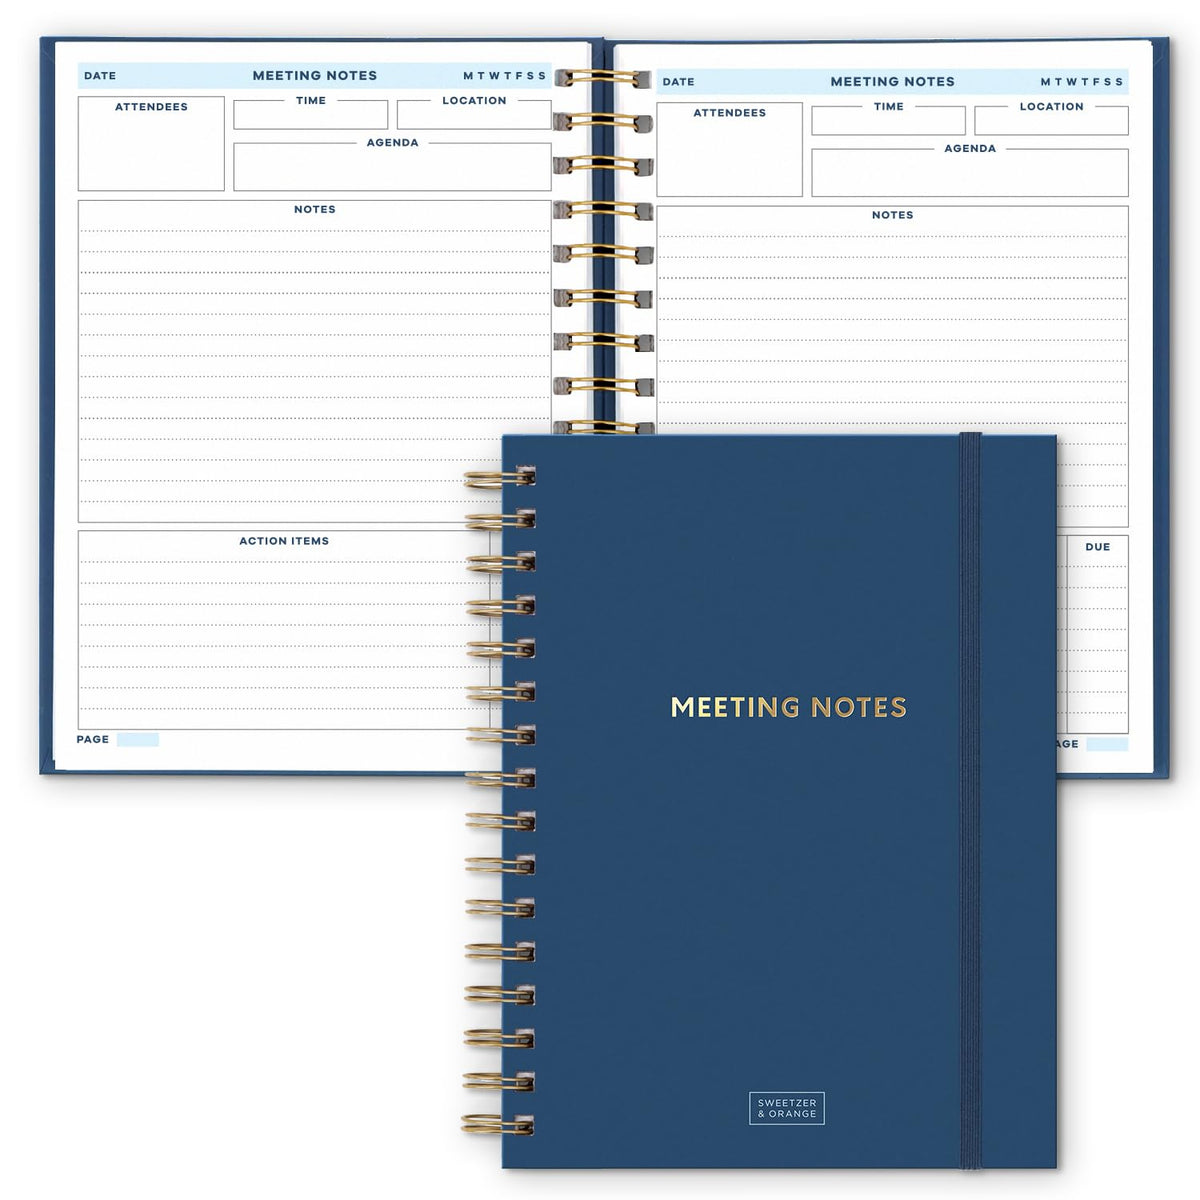 S&O Medium Meeting Notebook for Work - Professional Notebooks for Work Organization - Work Organizer Notebook - Work Notebook Organizer Planner - Meeting Notes Notebook for Work - 168 Pages, 6.4 inchesx8.4”